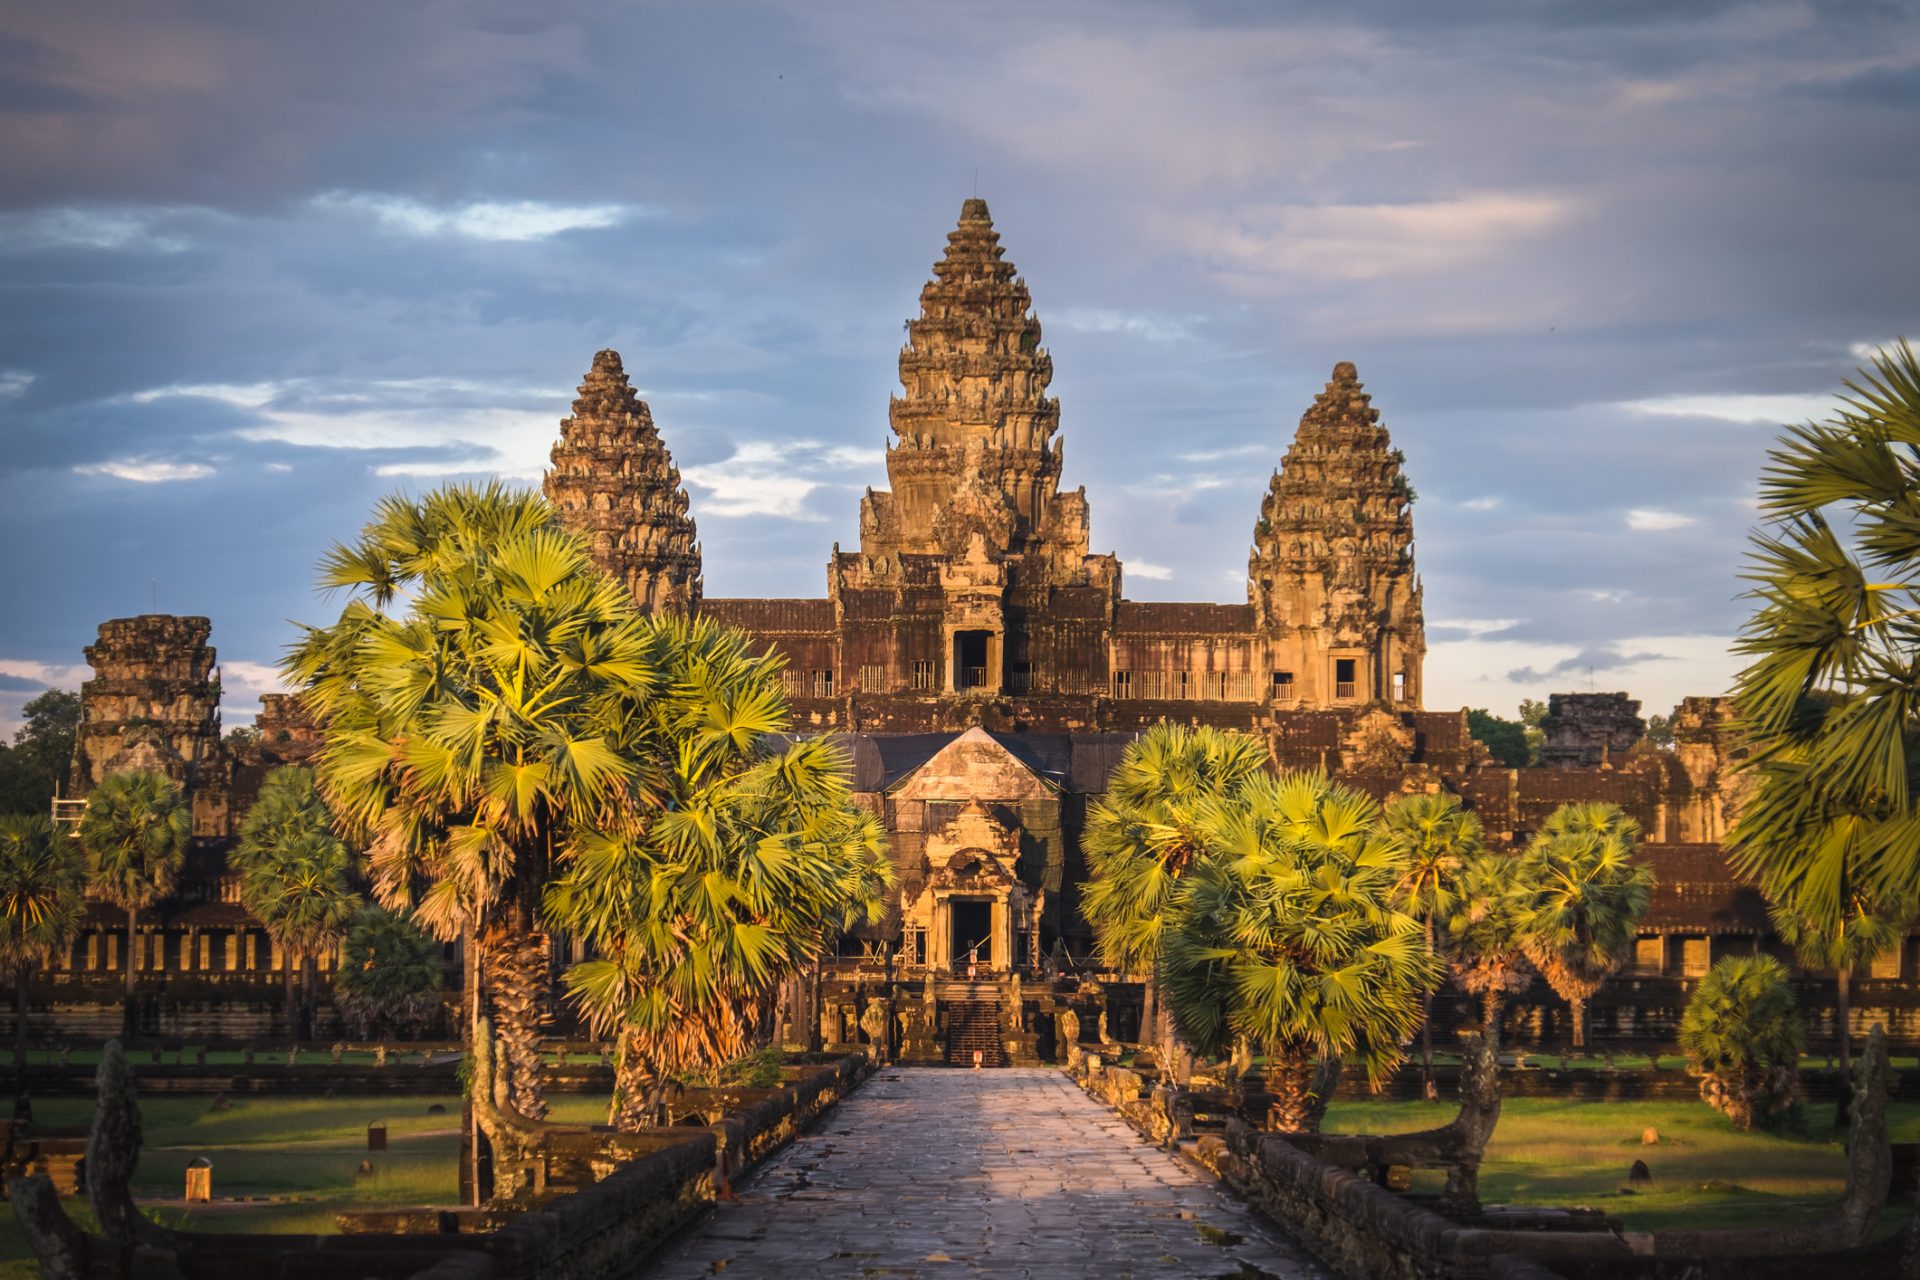 4. Angkor in Cambodia 